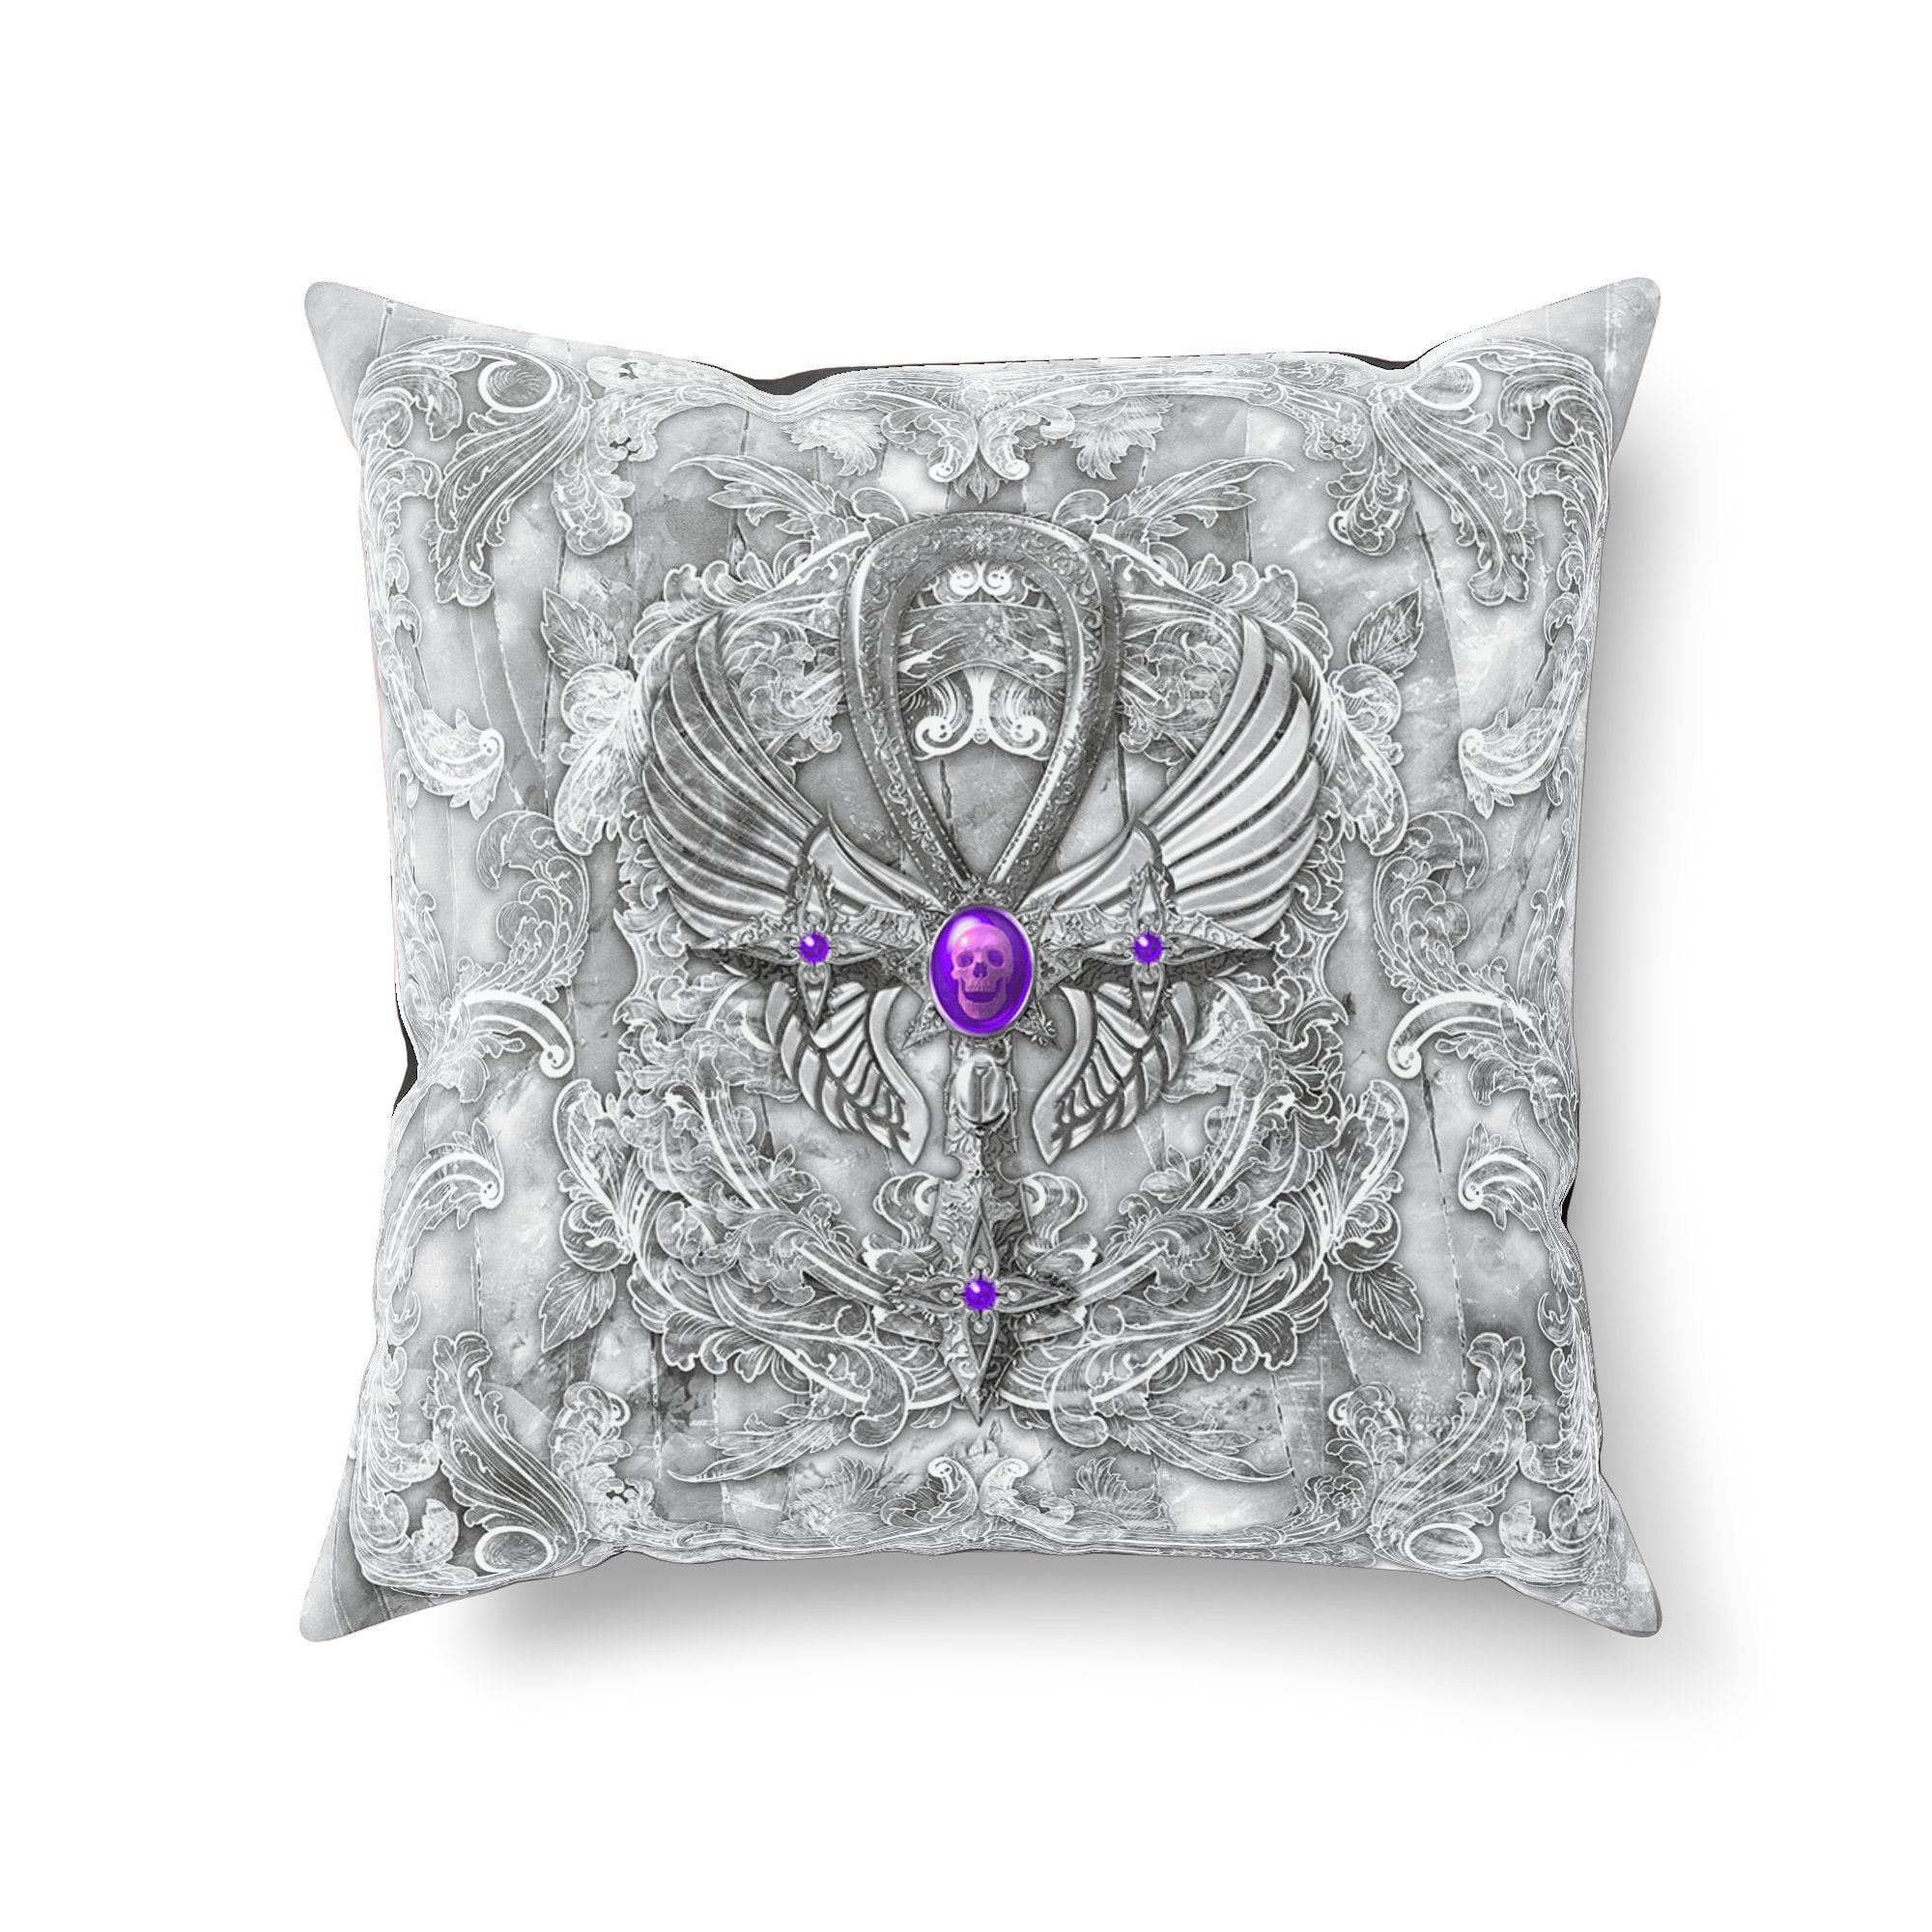 White Goth Throw Pillow, Decorative Accent Cushion, Gothic Room Decor, Occult Art, Alternative Home - Stone, Ankh Cross - Abysm Internal